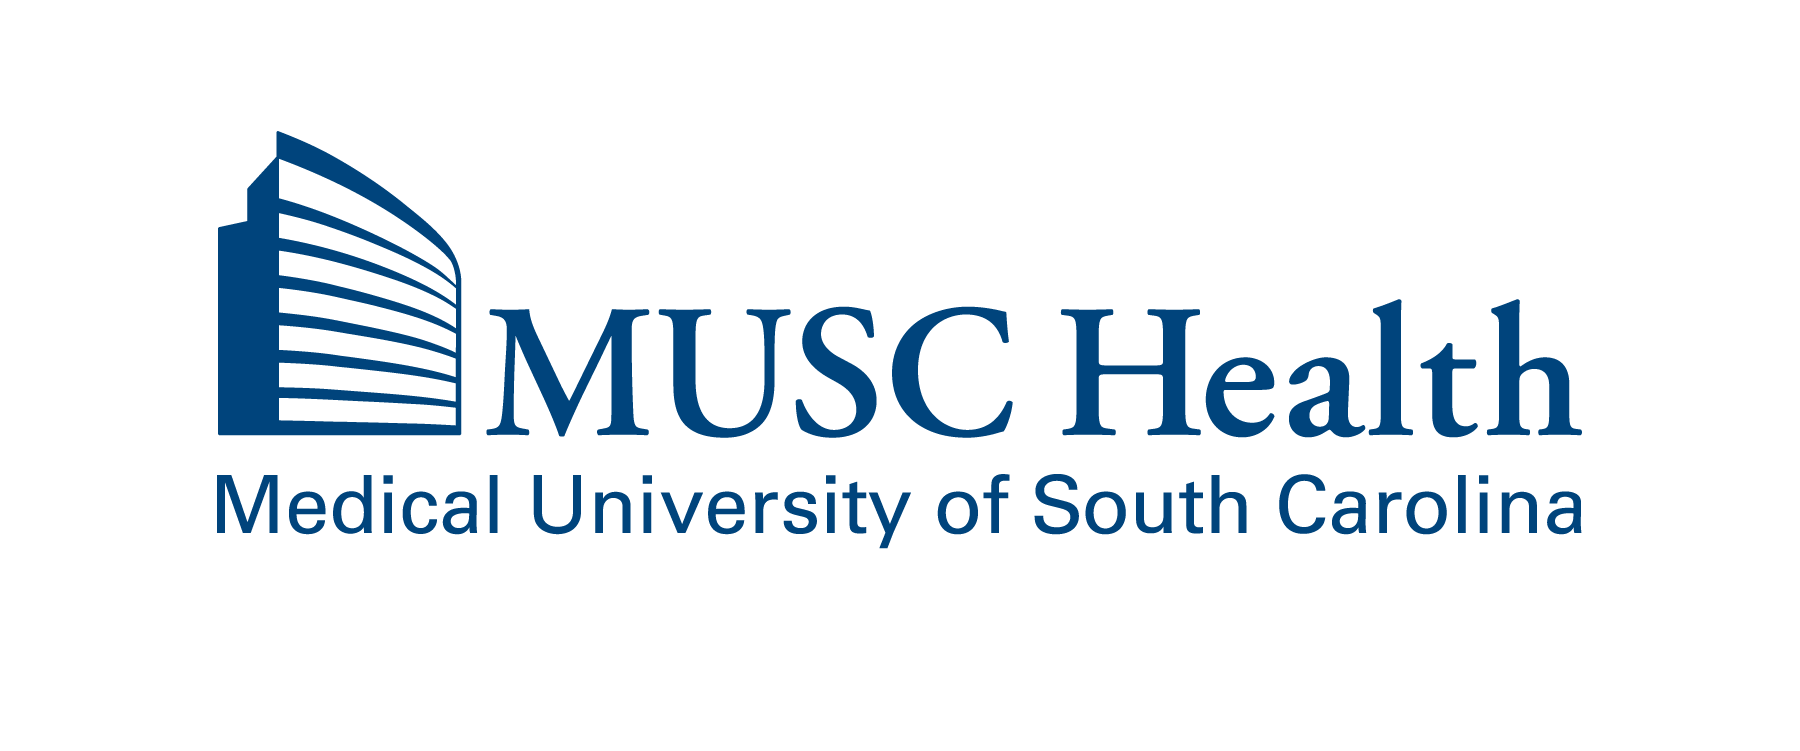 MUSC Health